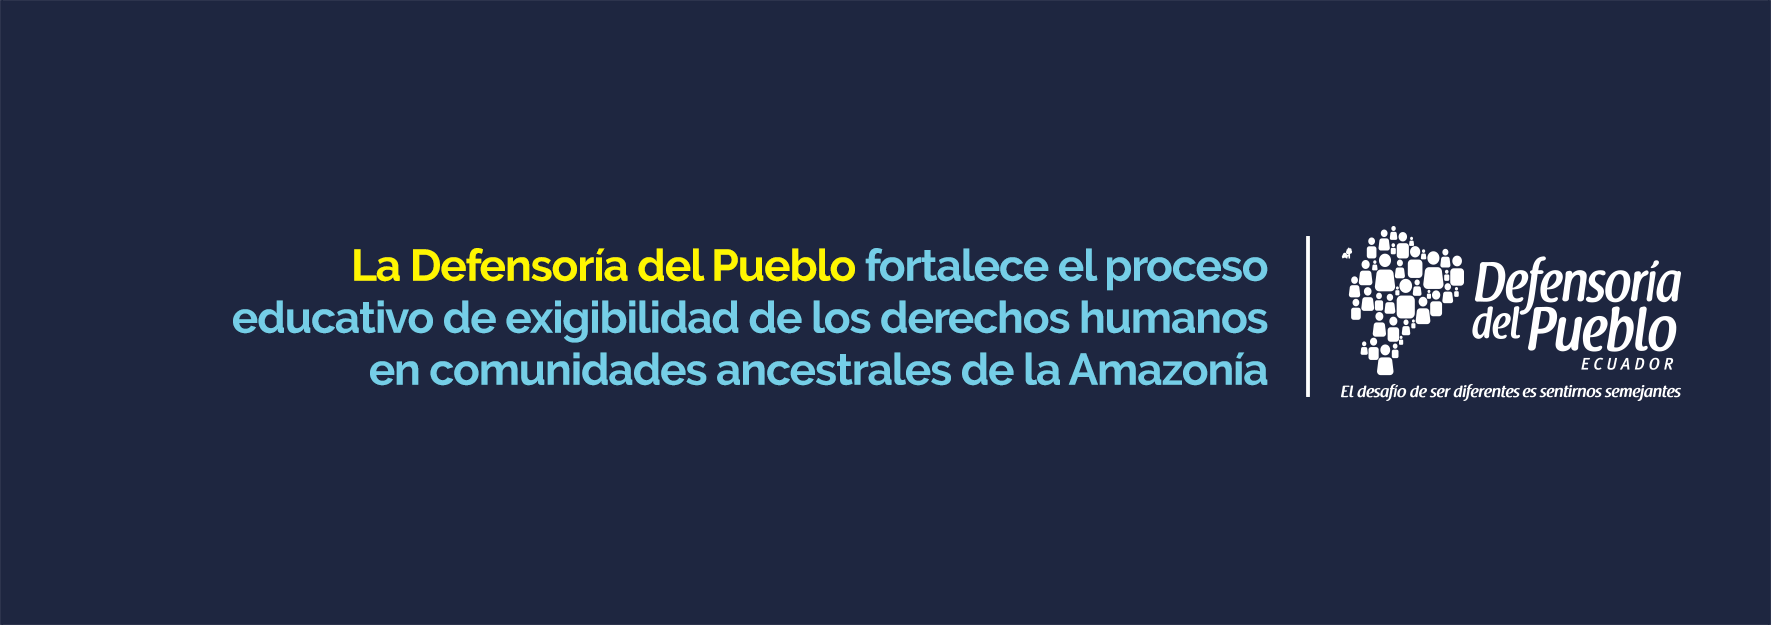 comunidades amazonia